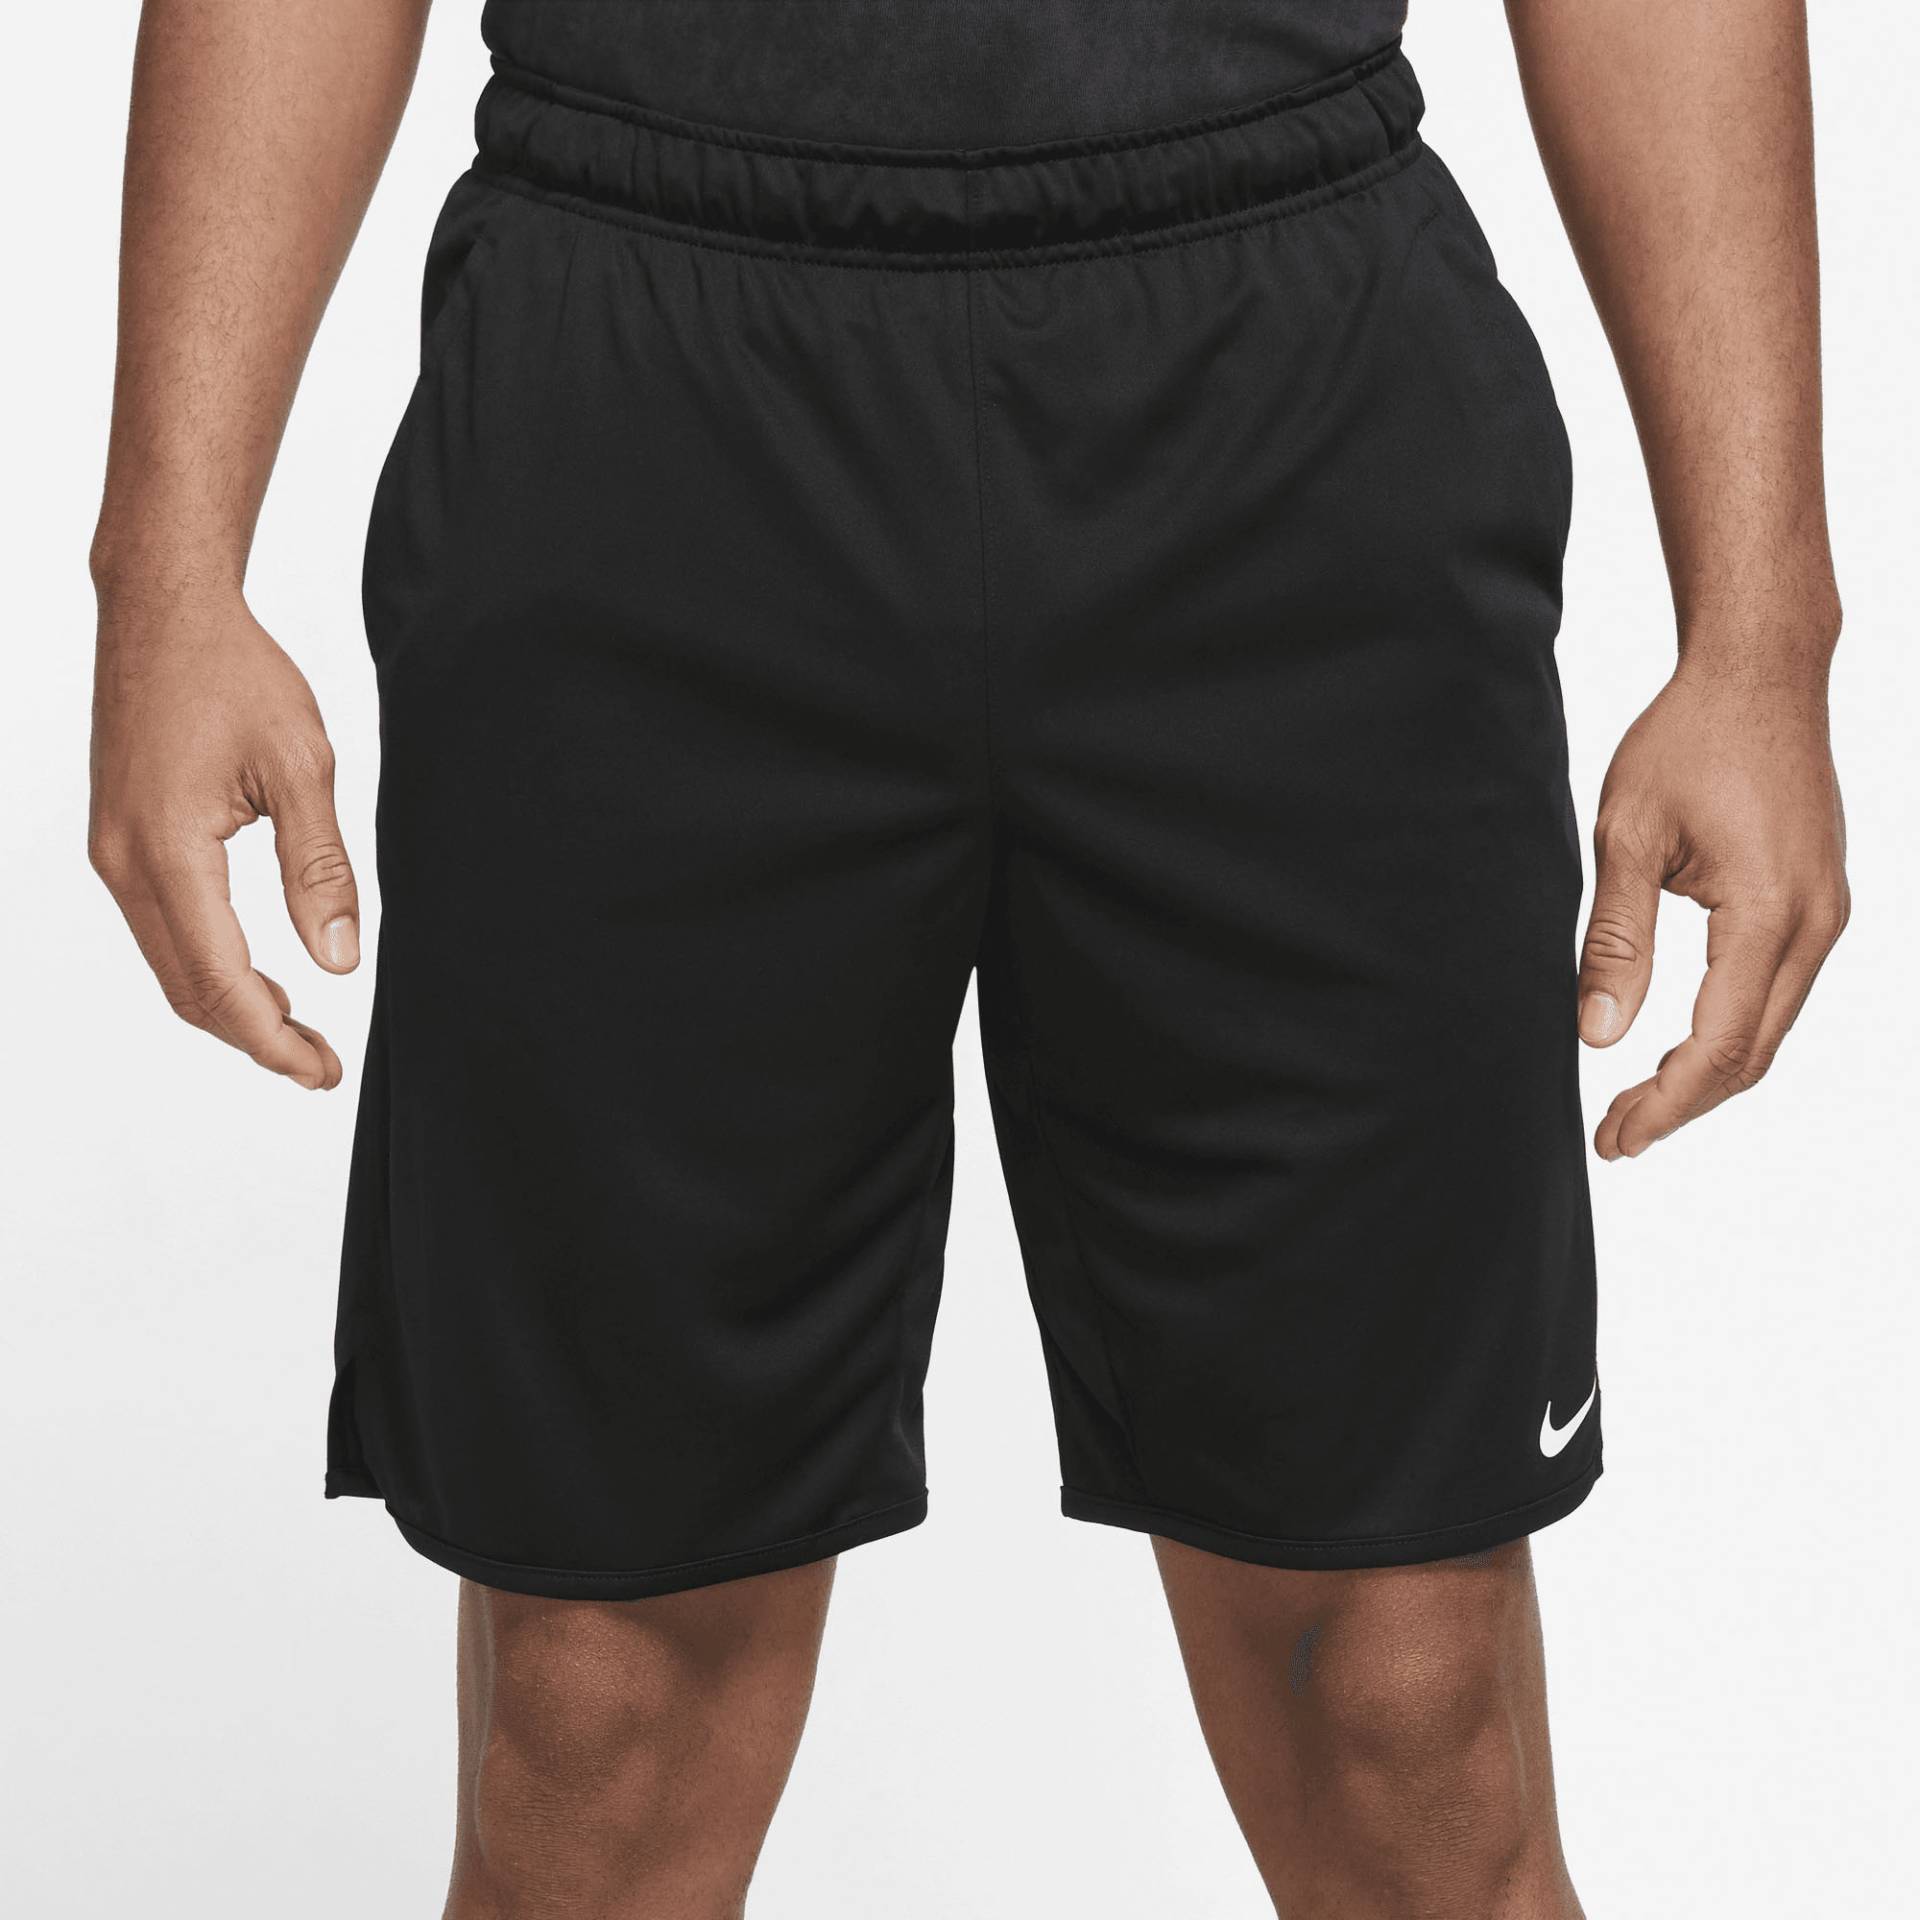 Nike Trainingsshorts »DRI-FIT TOTALITY MEN'S " UNLINED SHORTS« von Nike